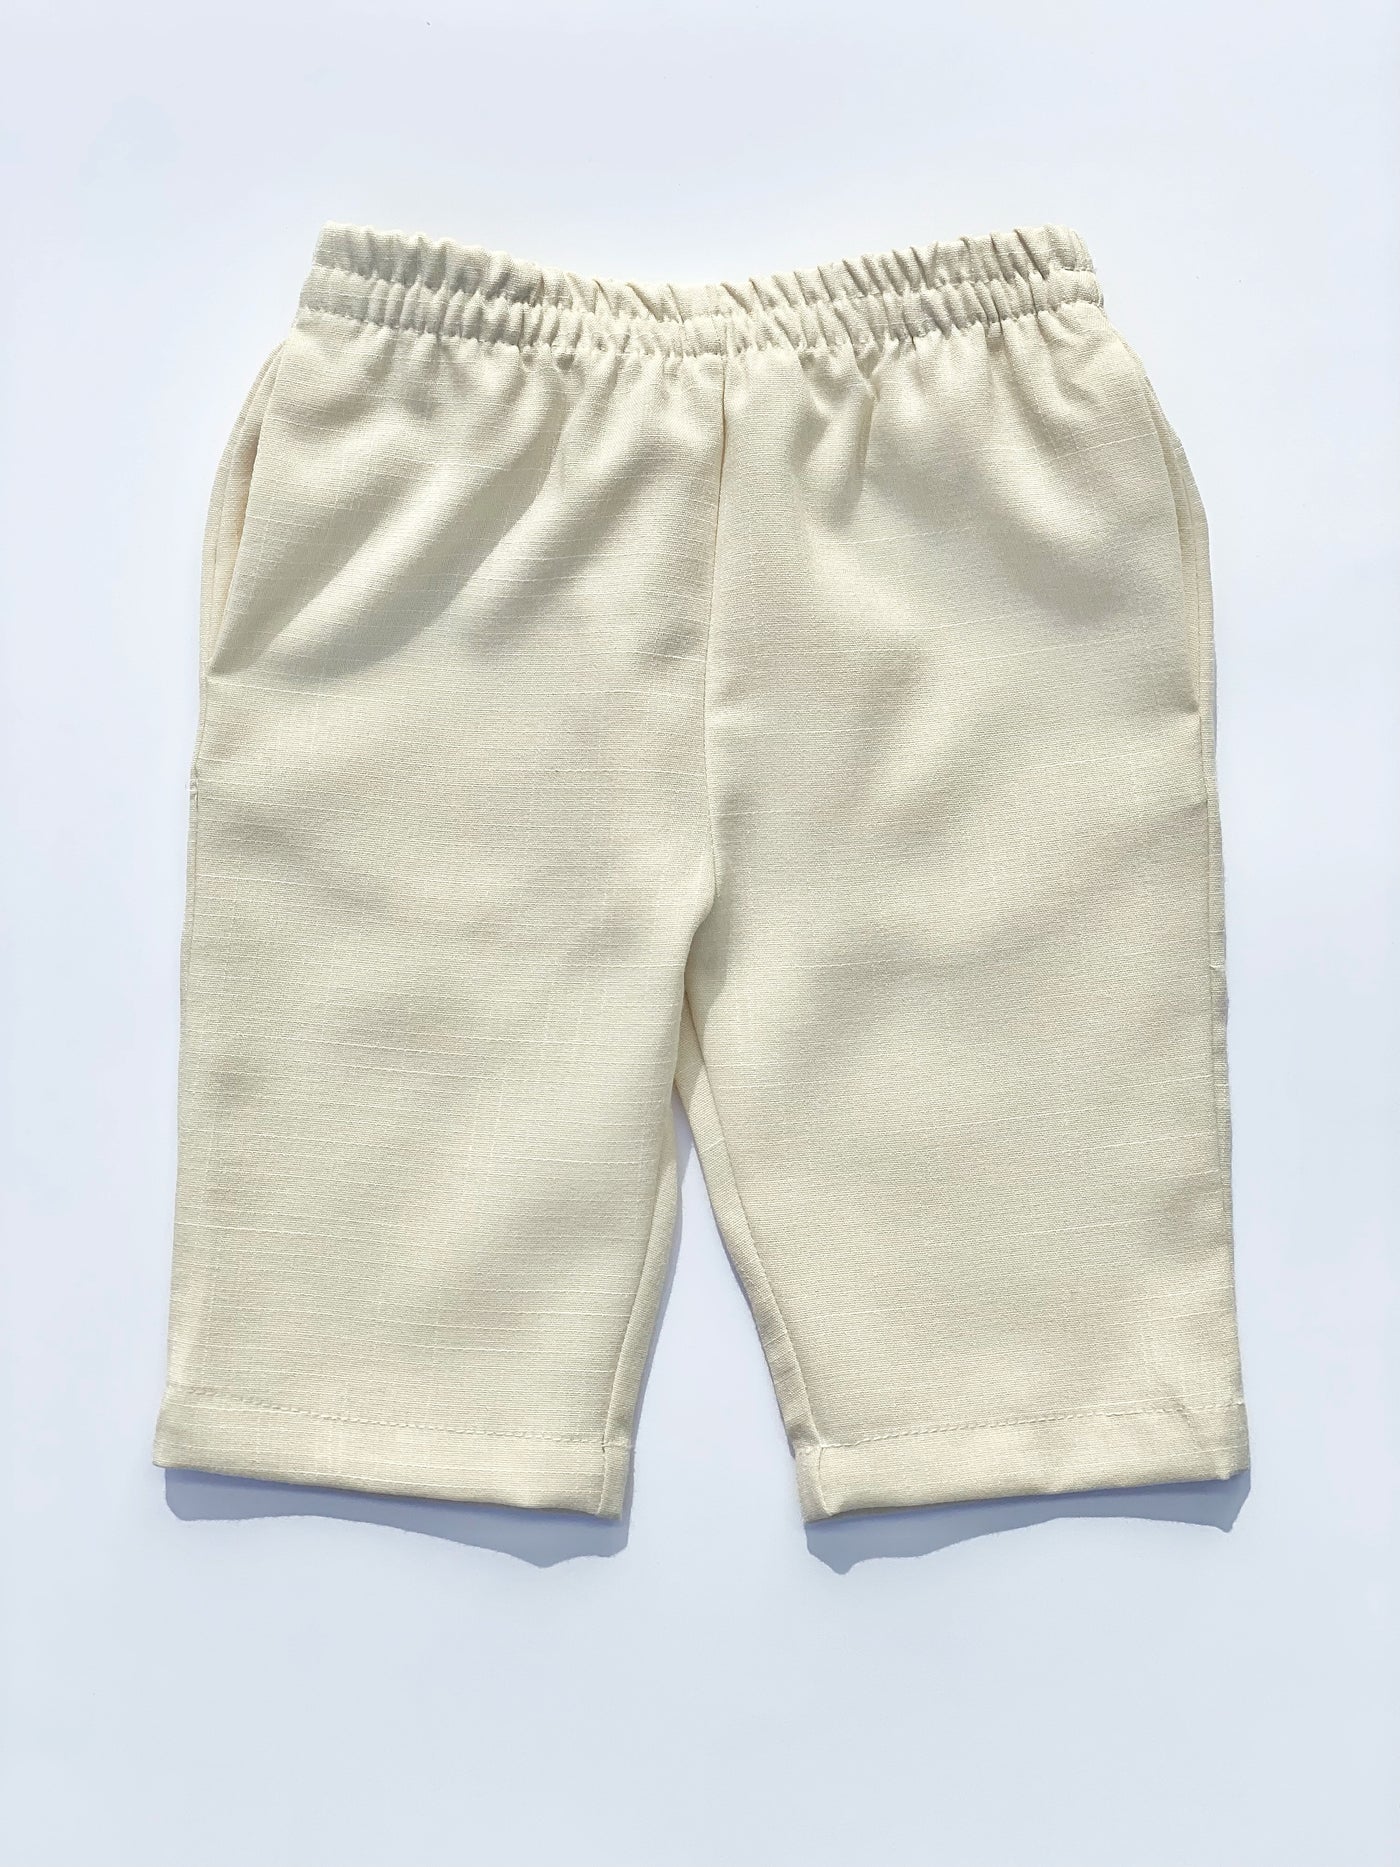 BENJI Unisex Lounge Pants in Ivory